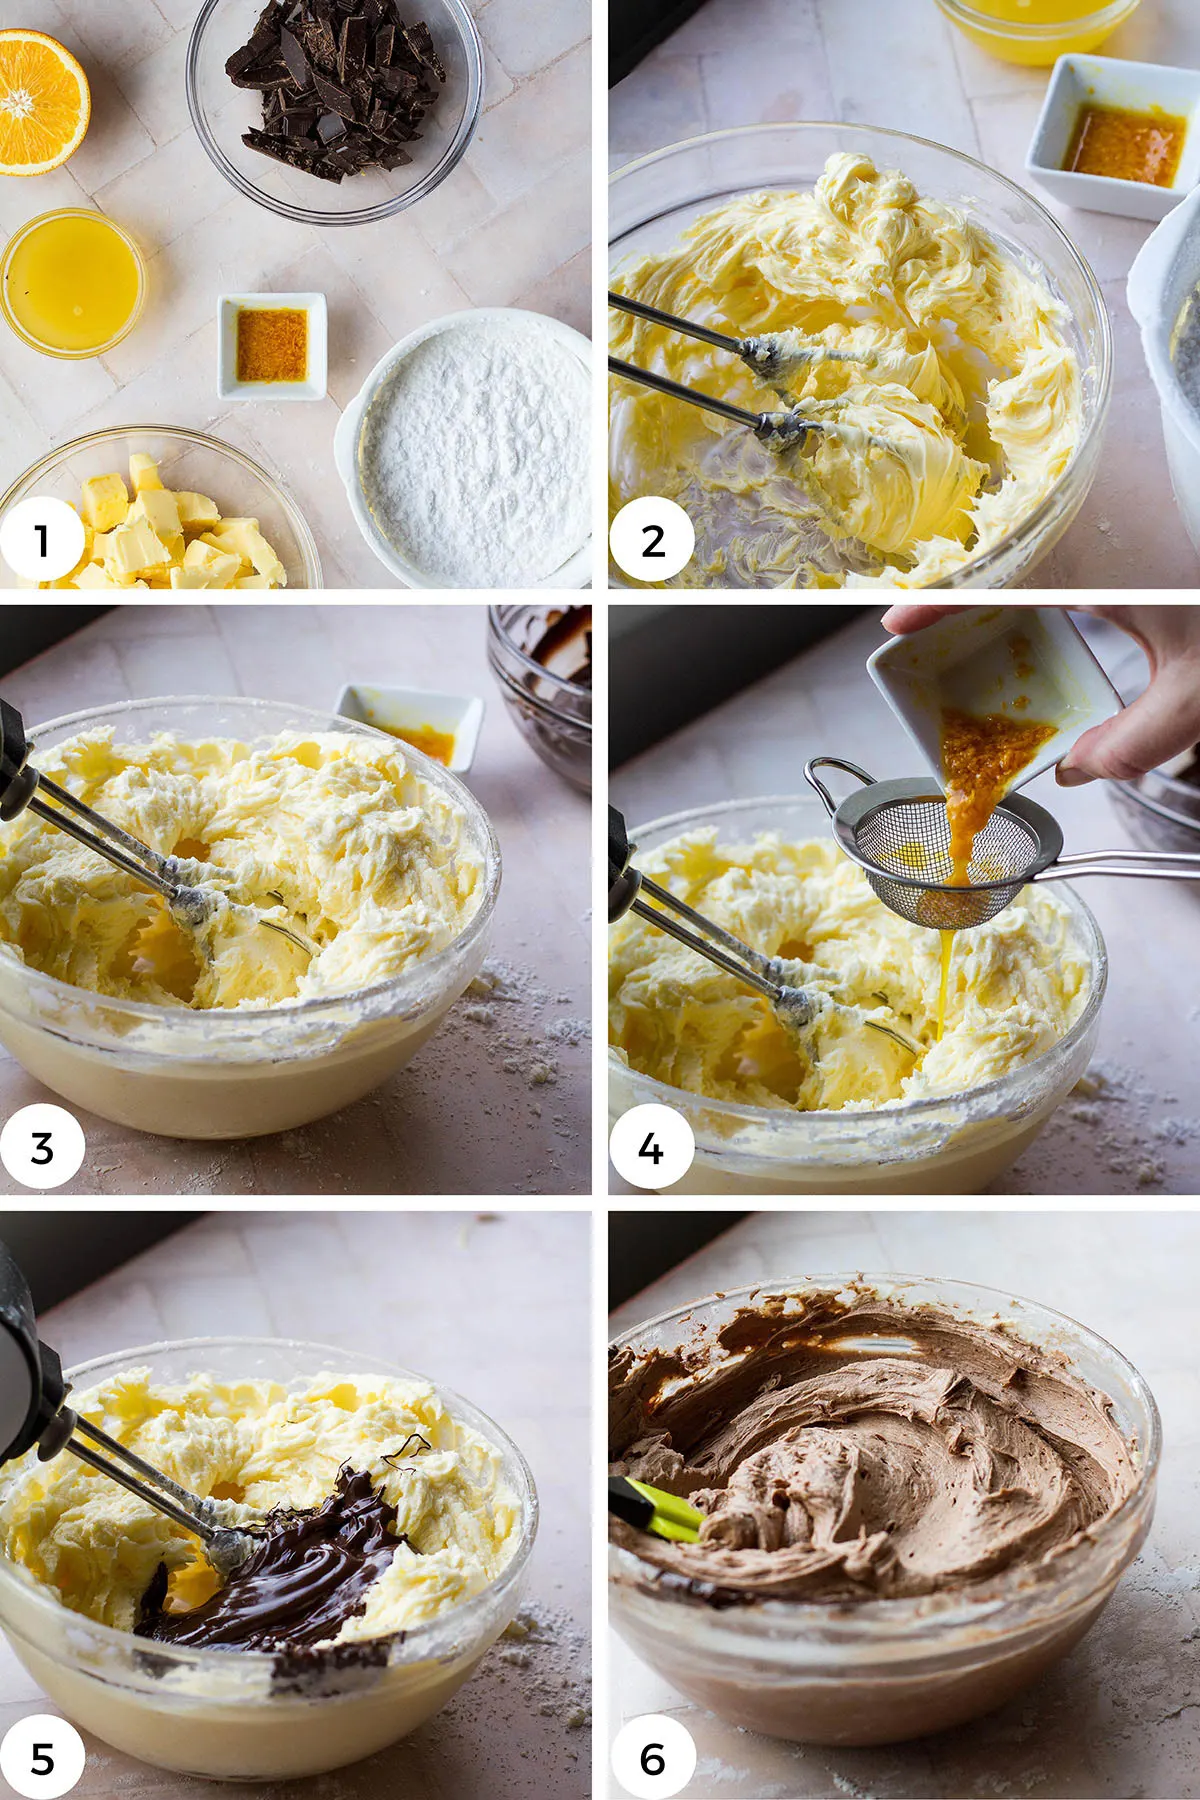 Steps to make the orange chocolate buttercream.